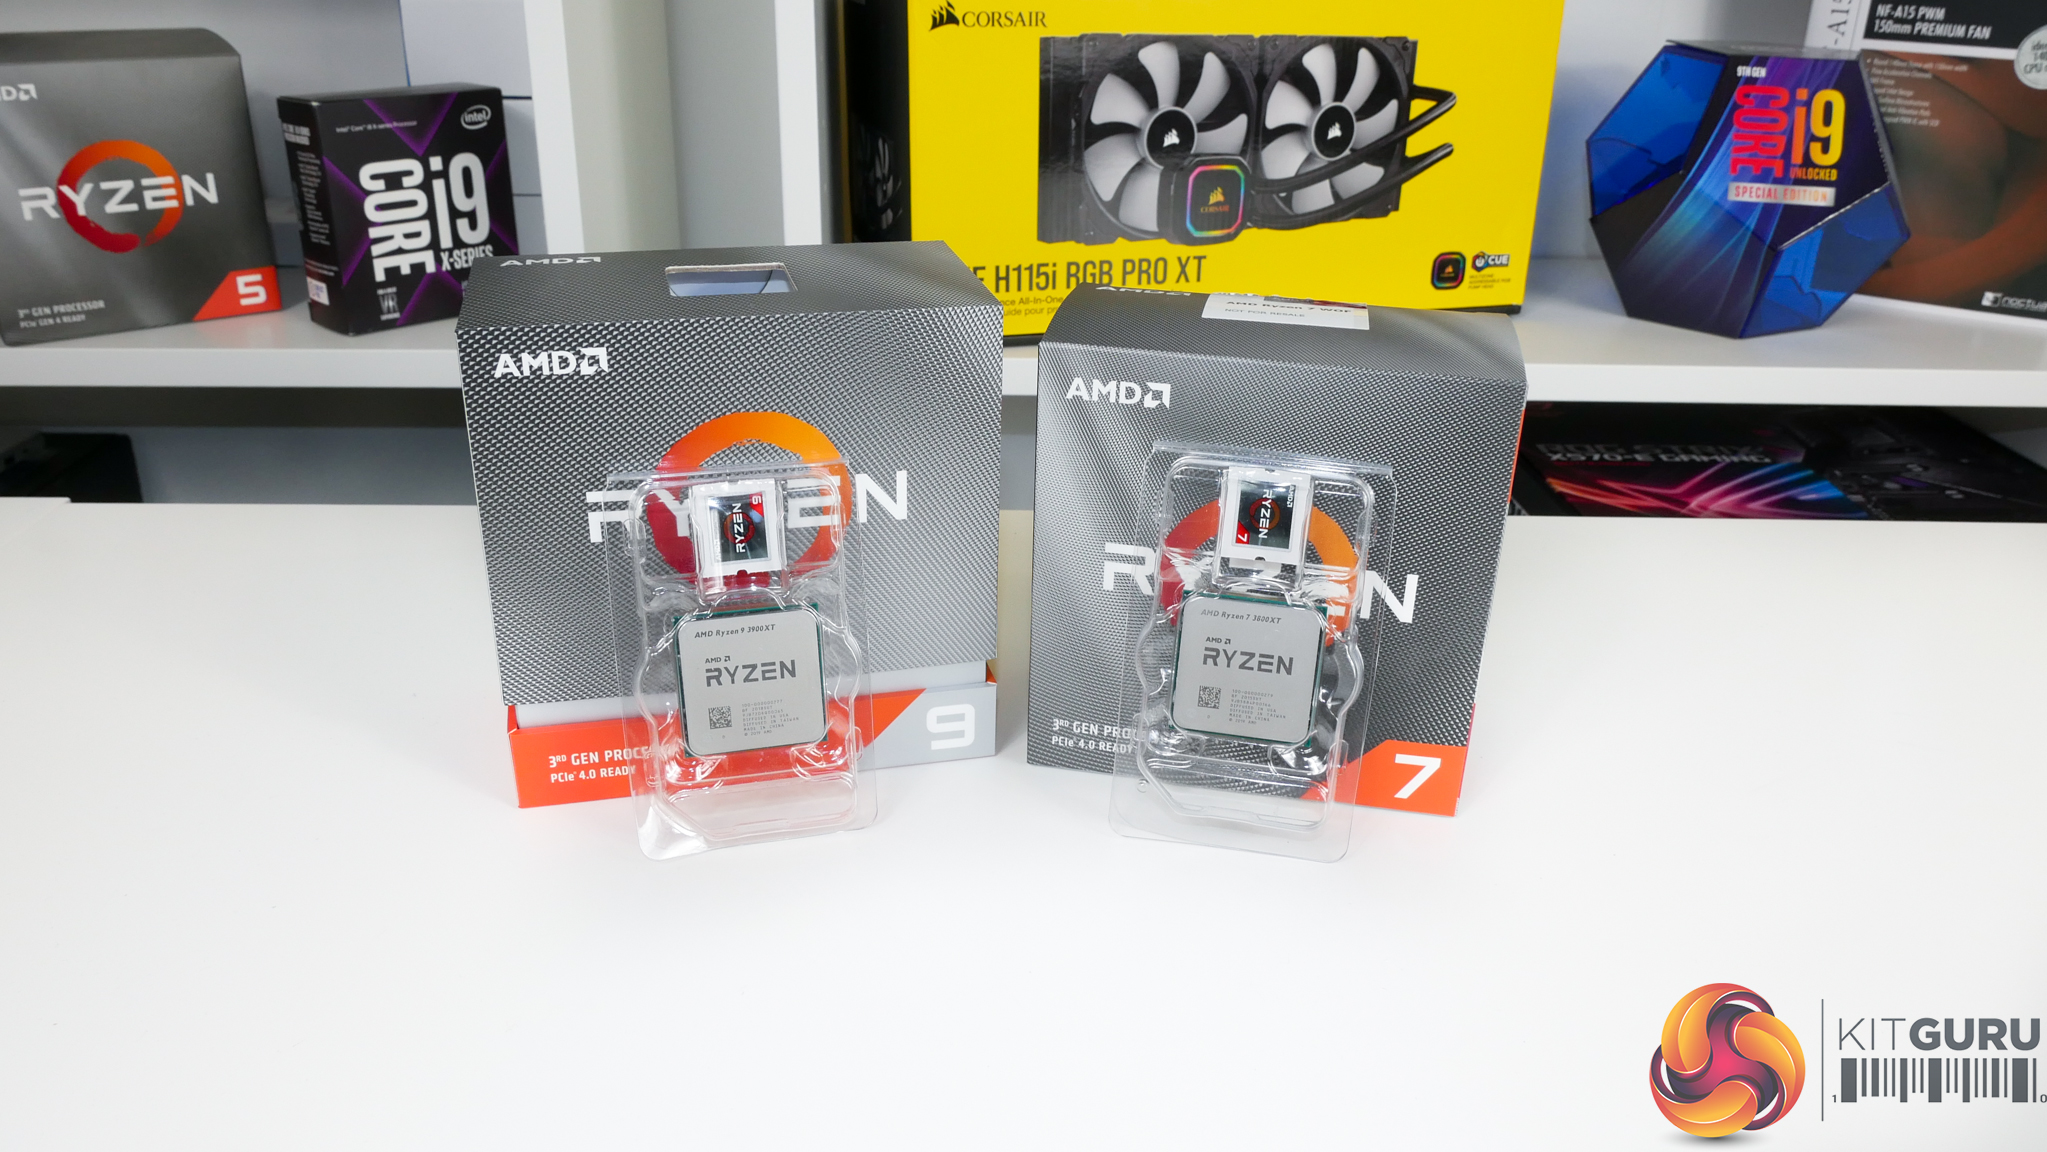 AMD Ryzen 9 3900XT and Ryzen 7 3800XT CPU Review | KitGuru